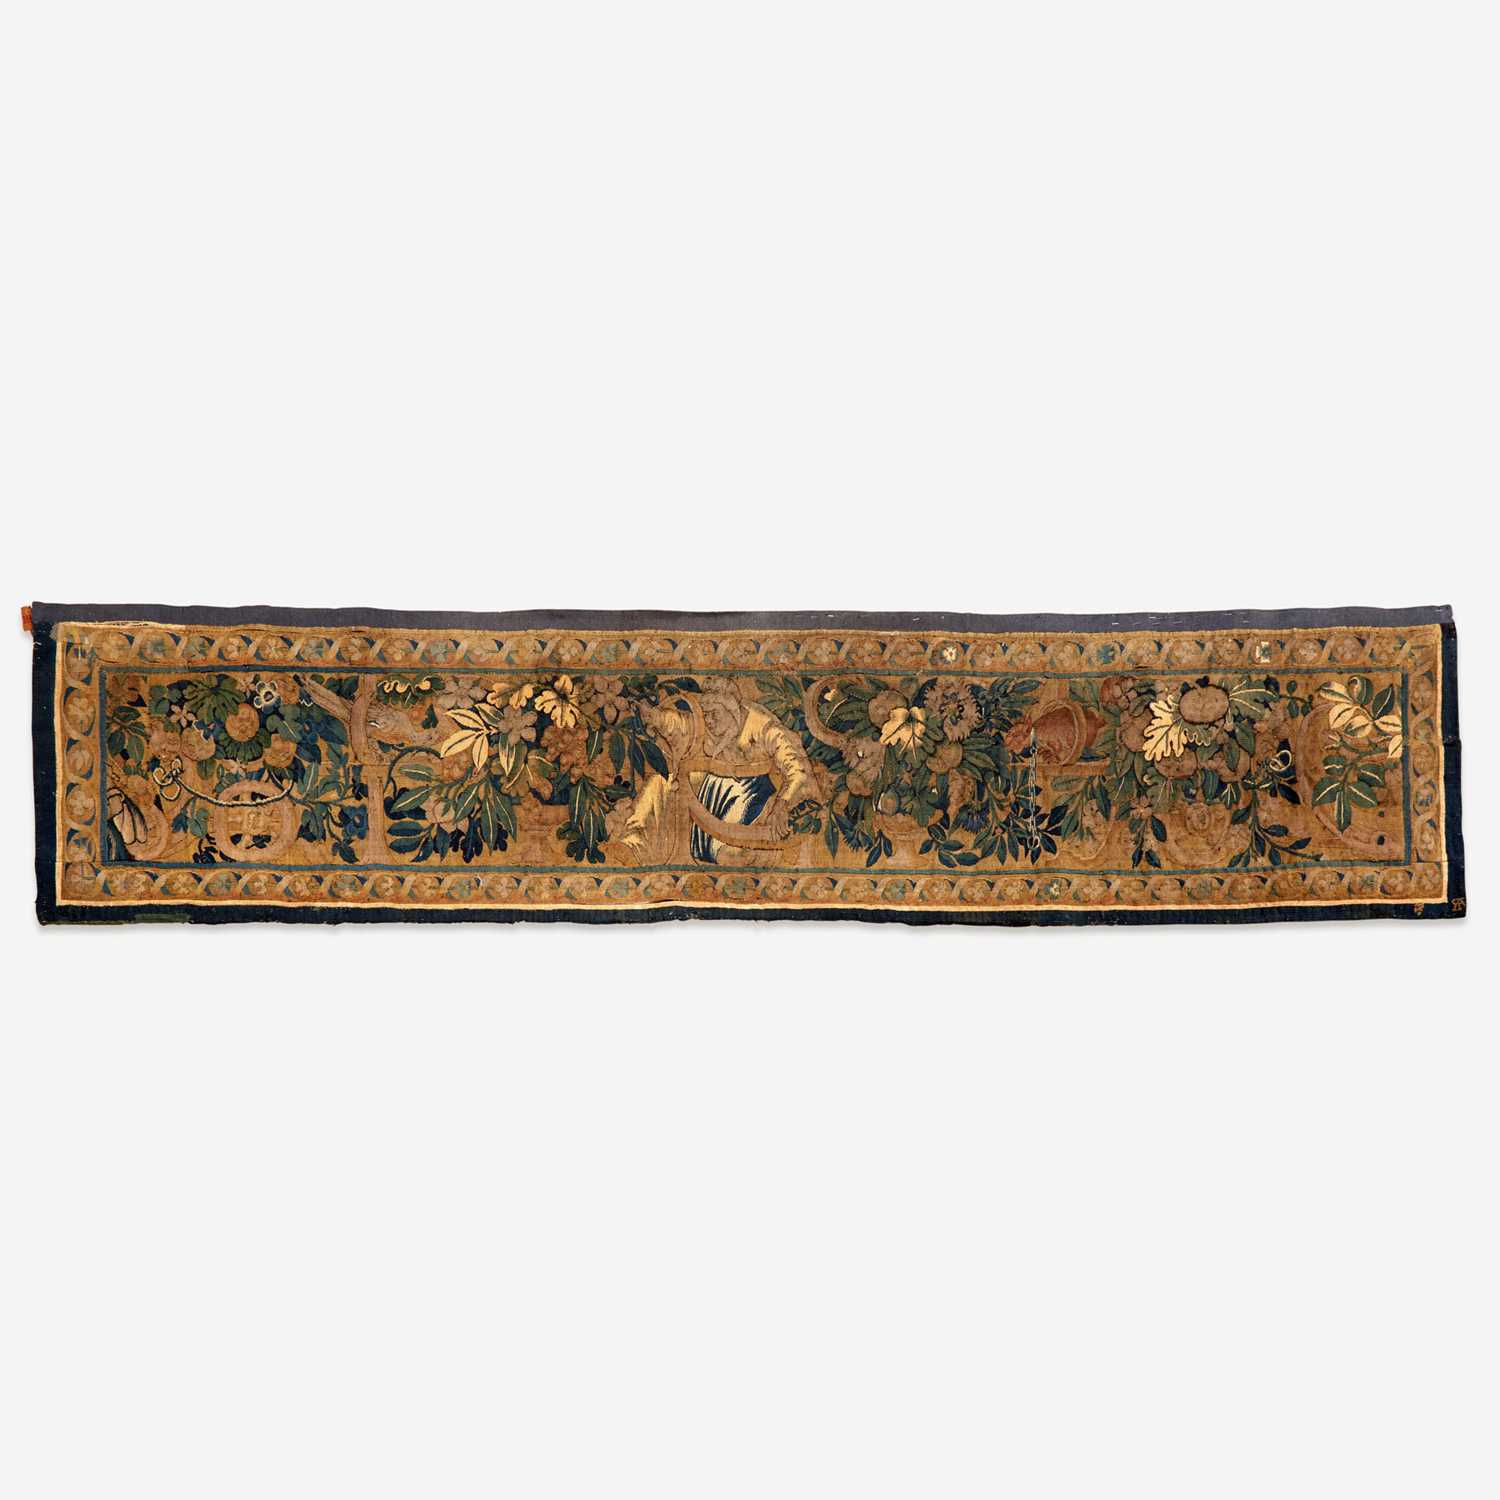 Lot 26 - A Flemish Verdure Tapestry Fragment